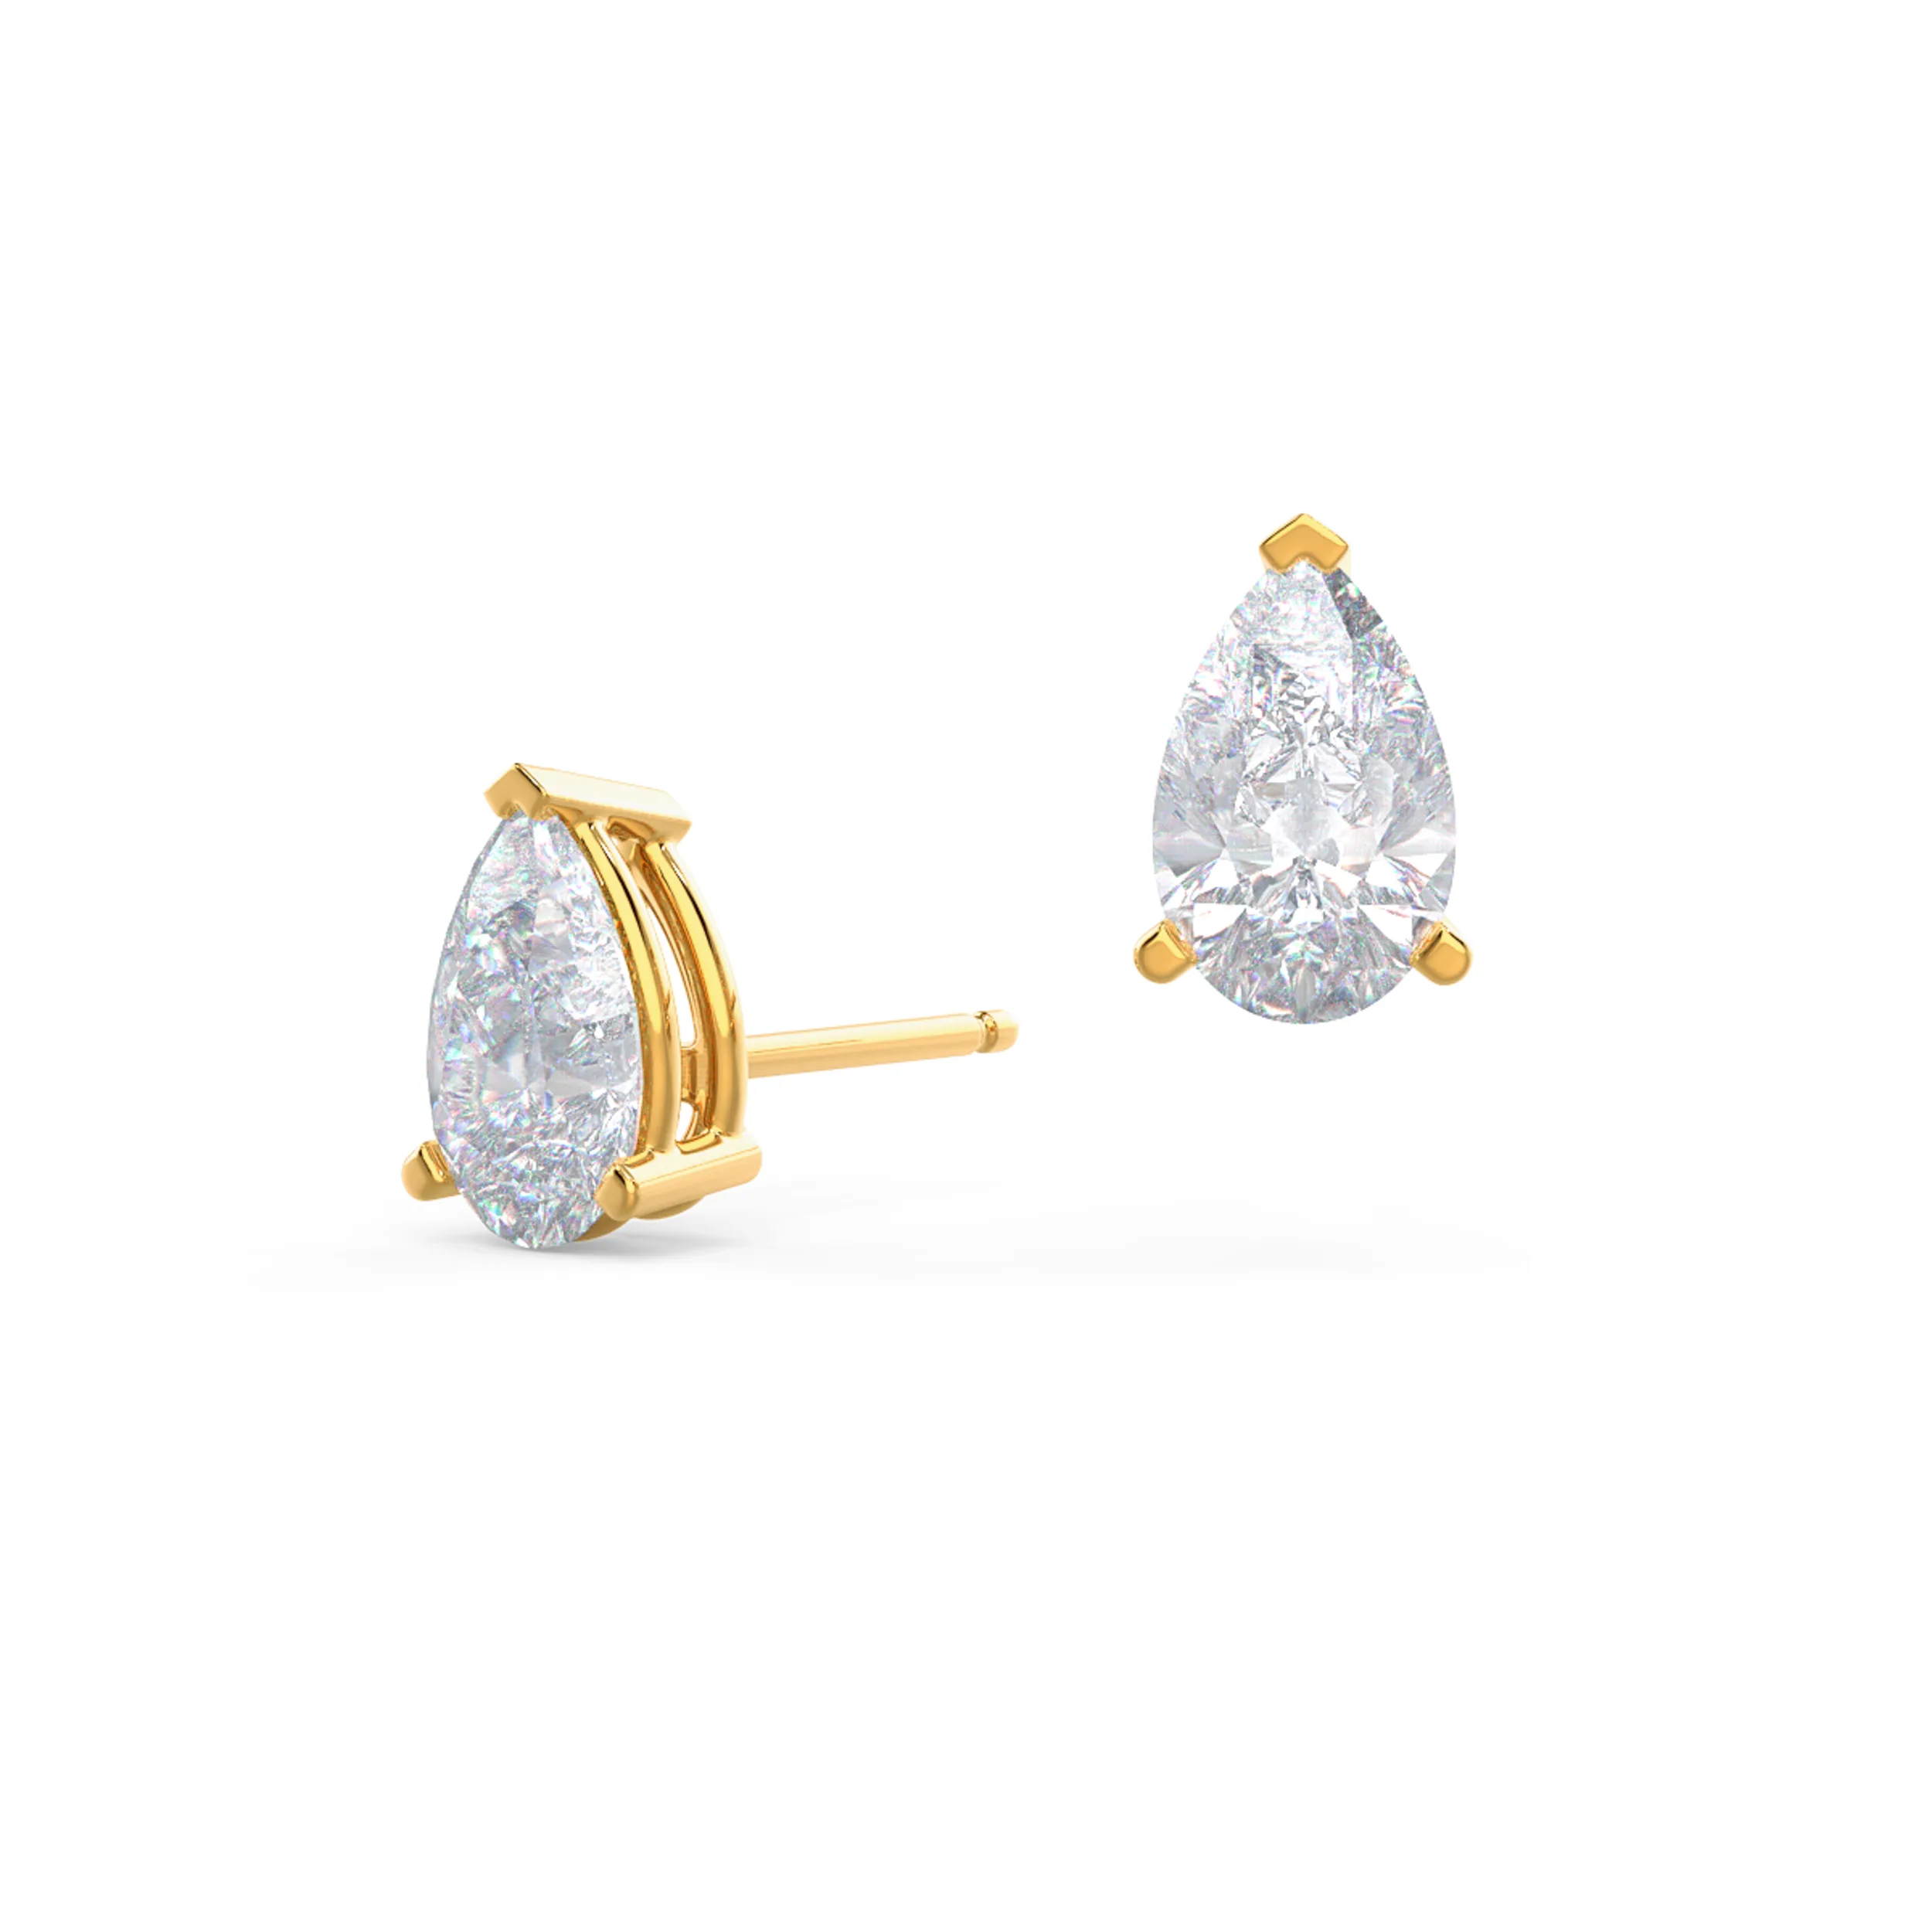 1.4 Carat Diamonds set in 14k Yellow Gold Pear Stud Earrings (Main View)